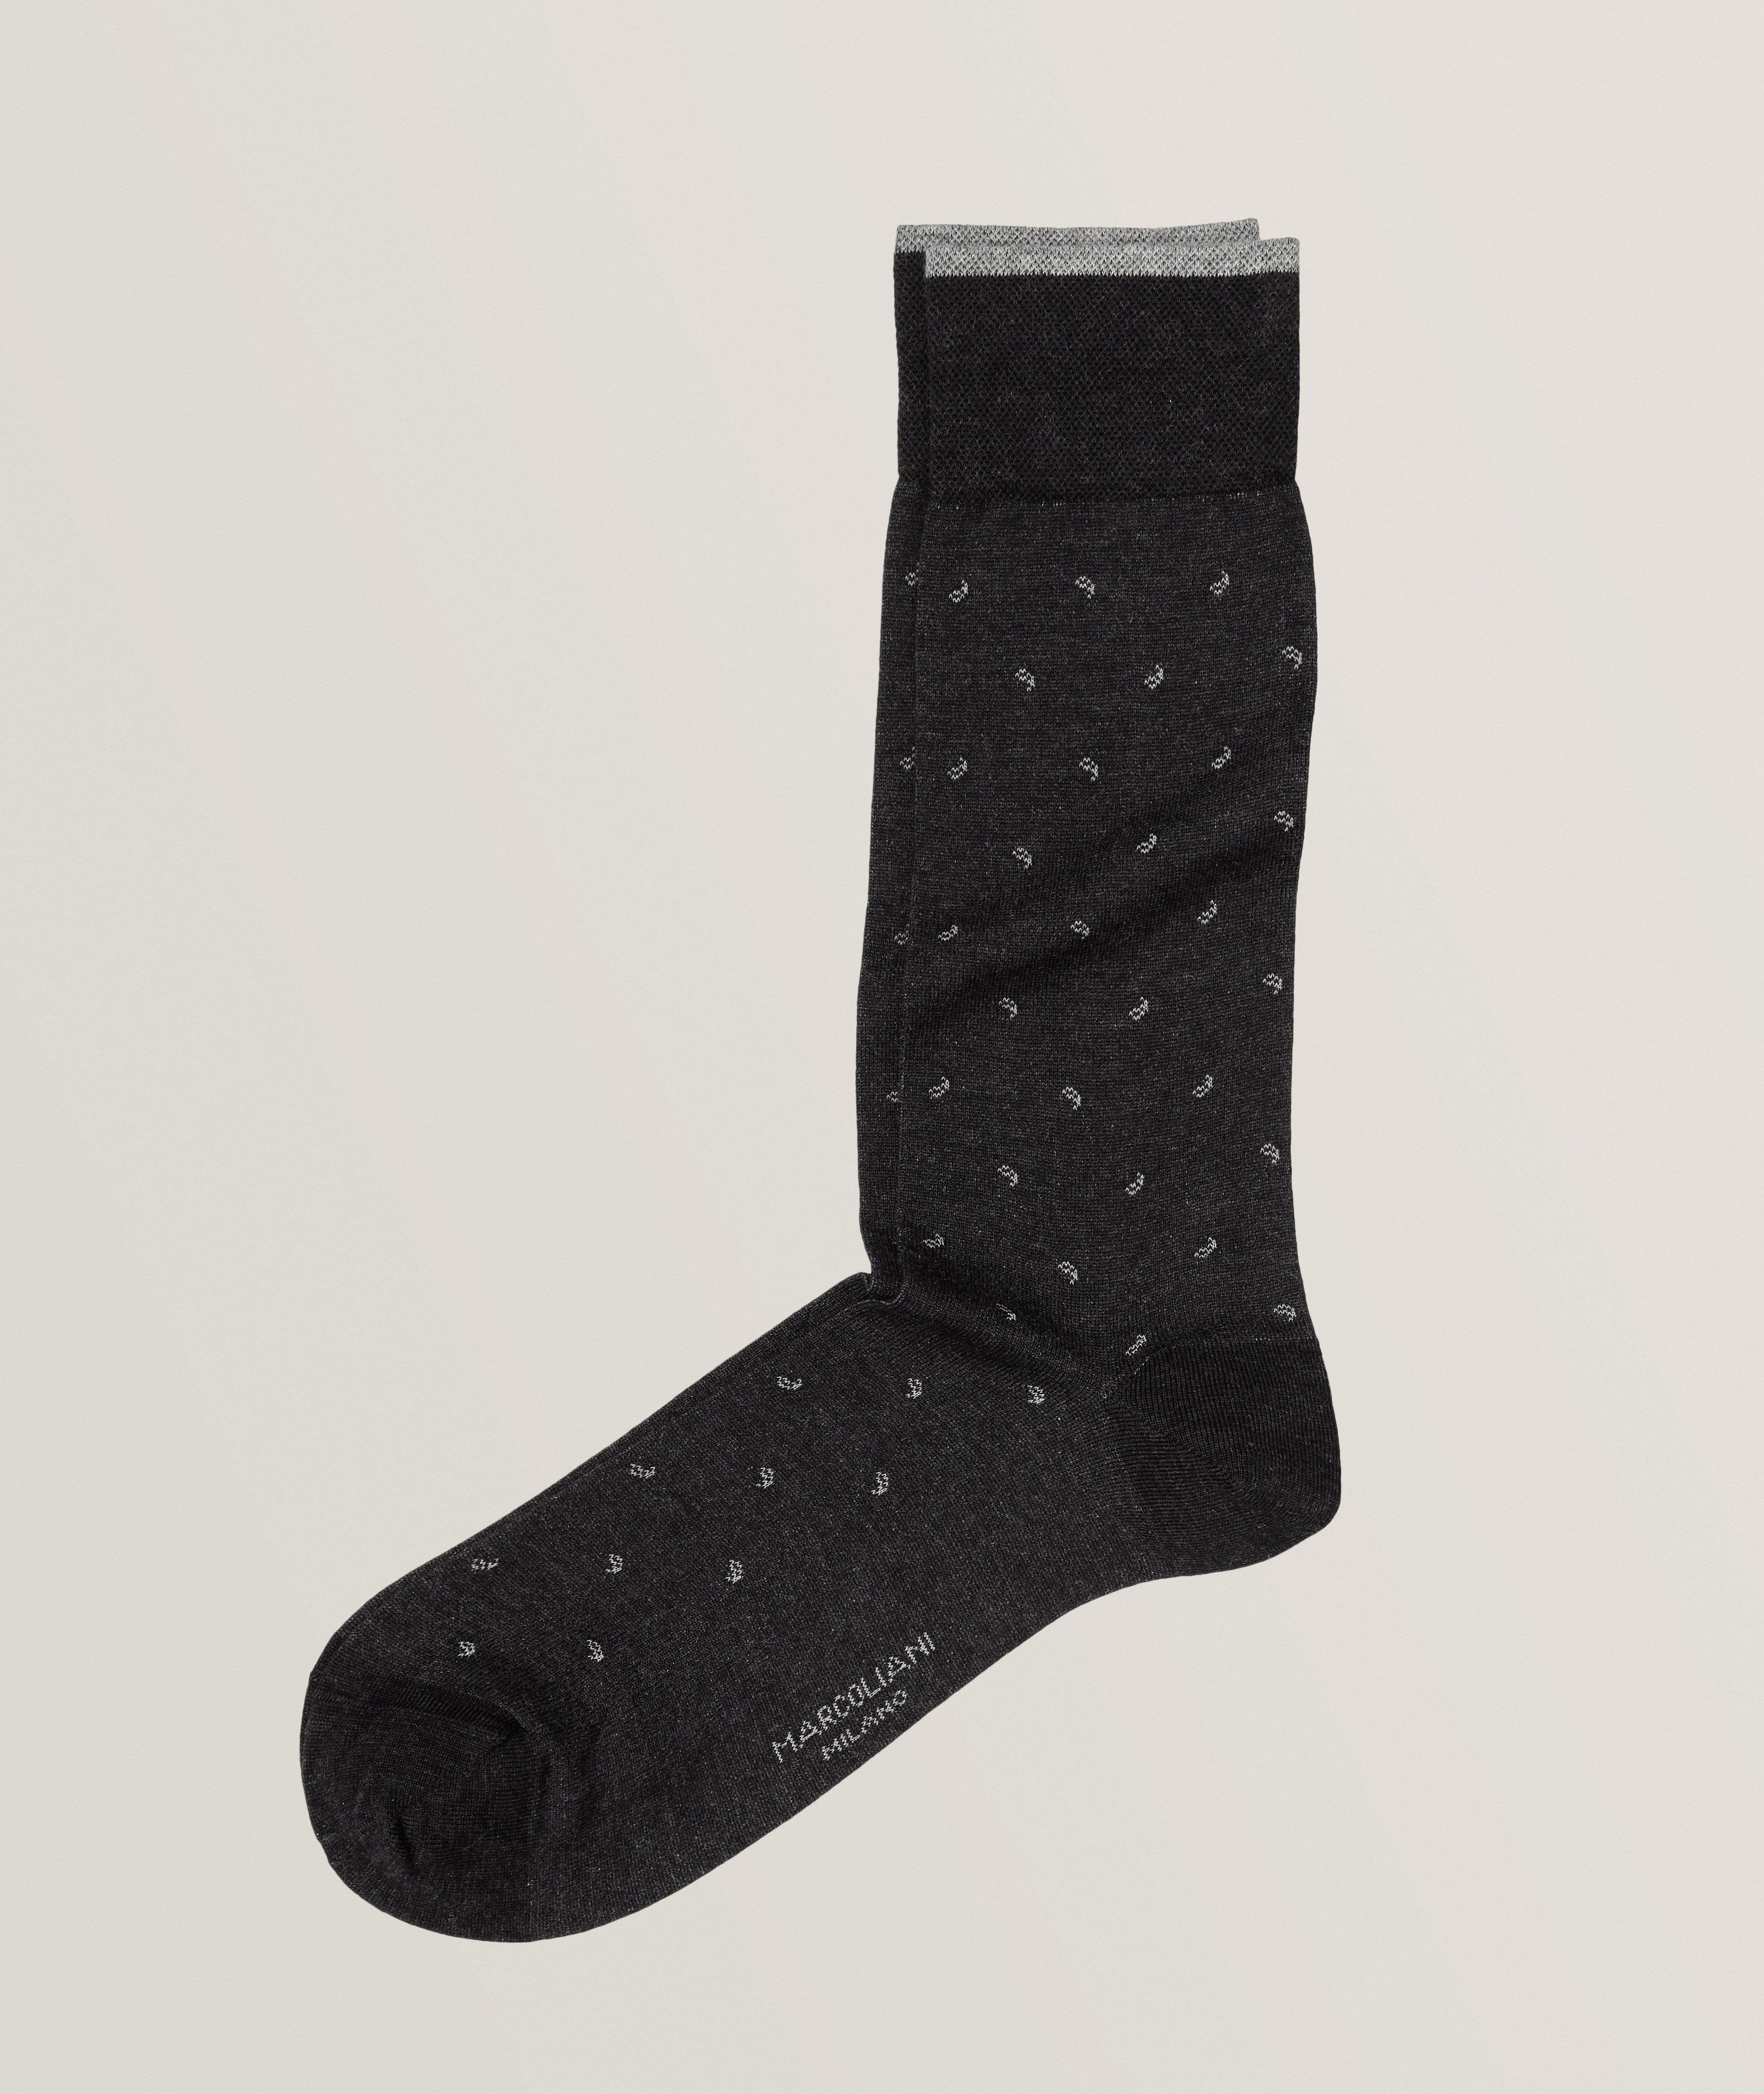 Micro Paisley Cotton Blend Crew Socks image 0